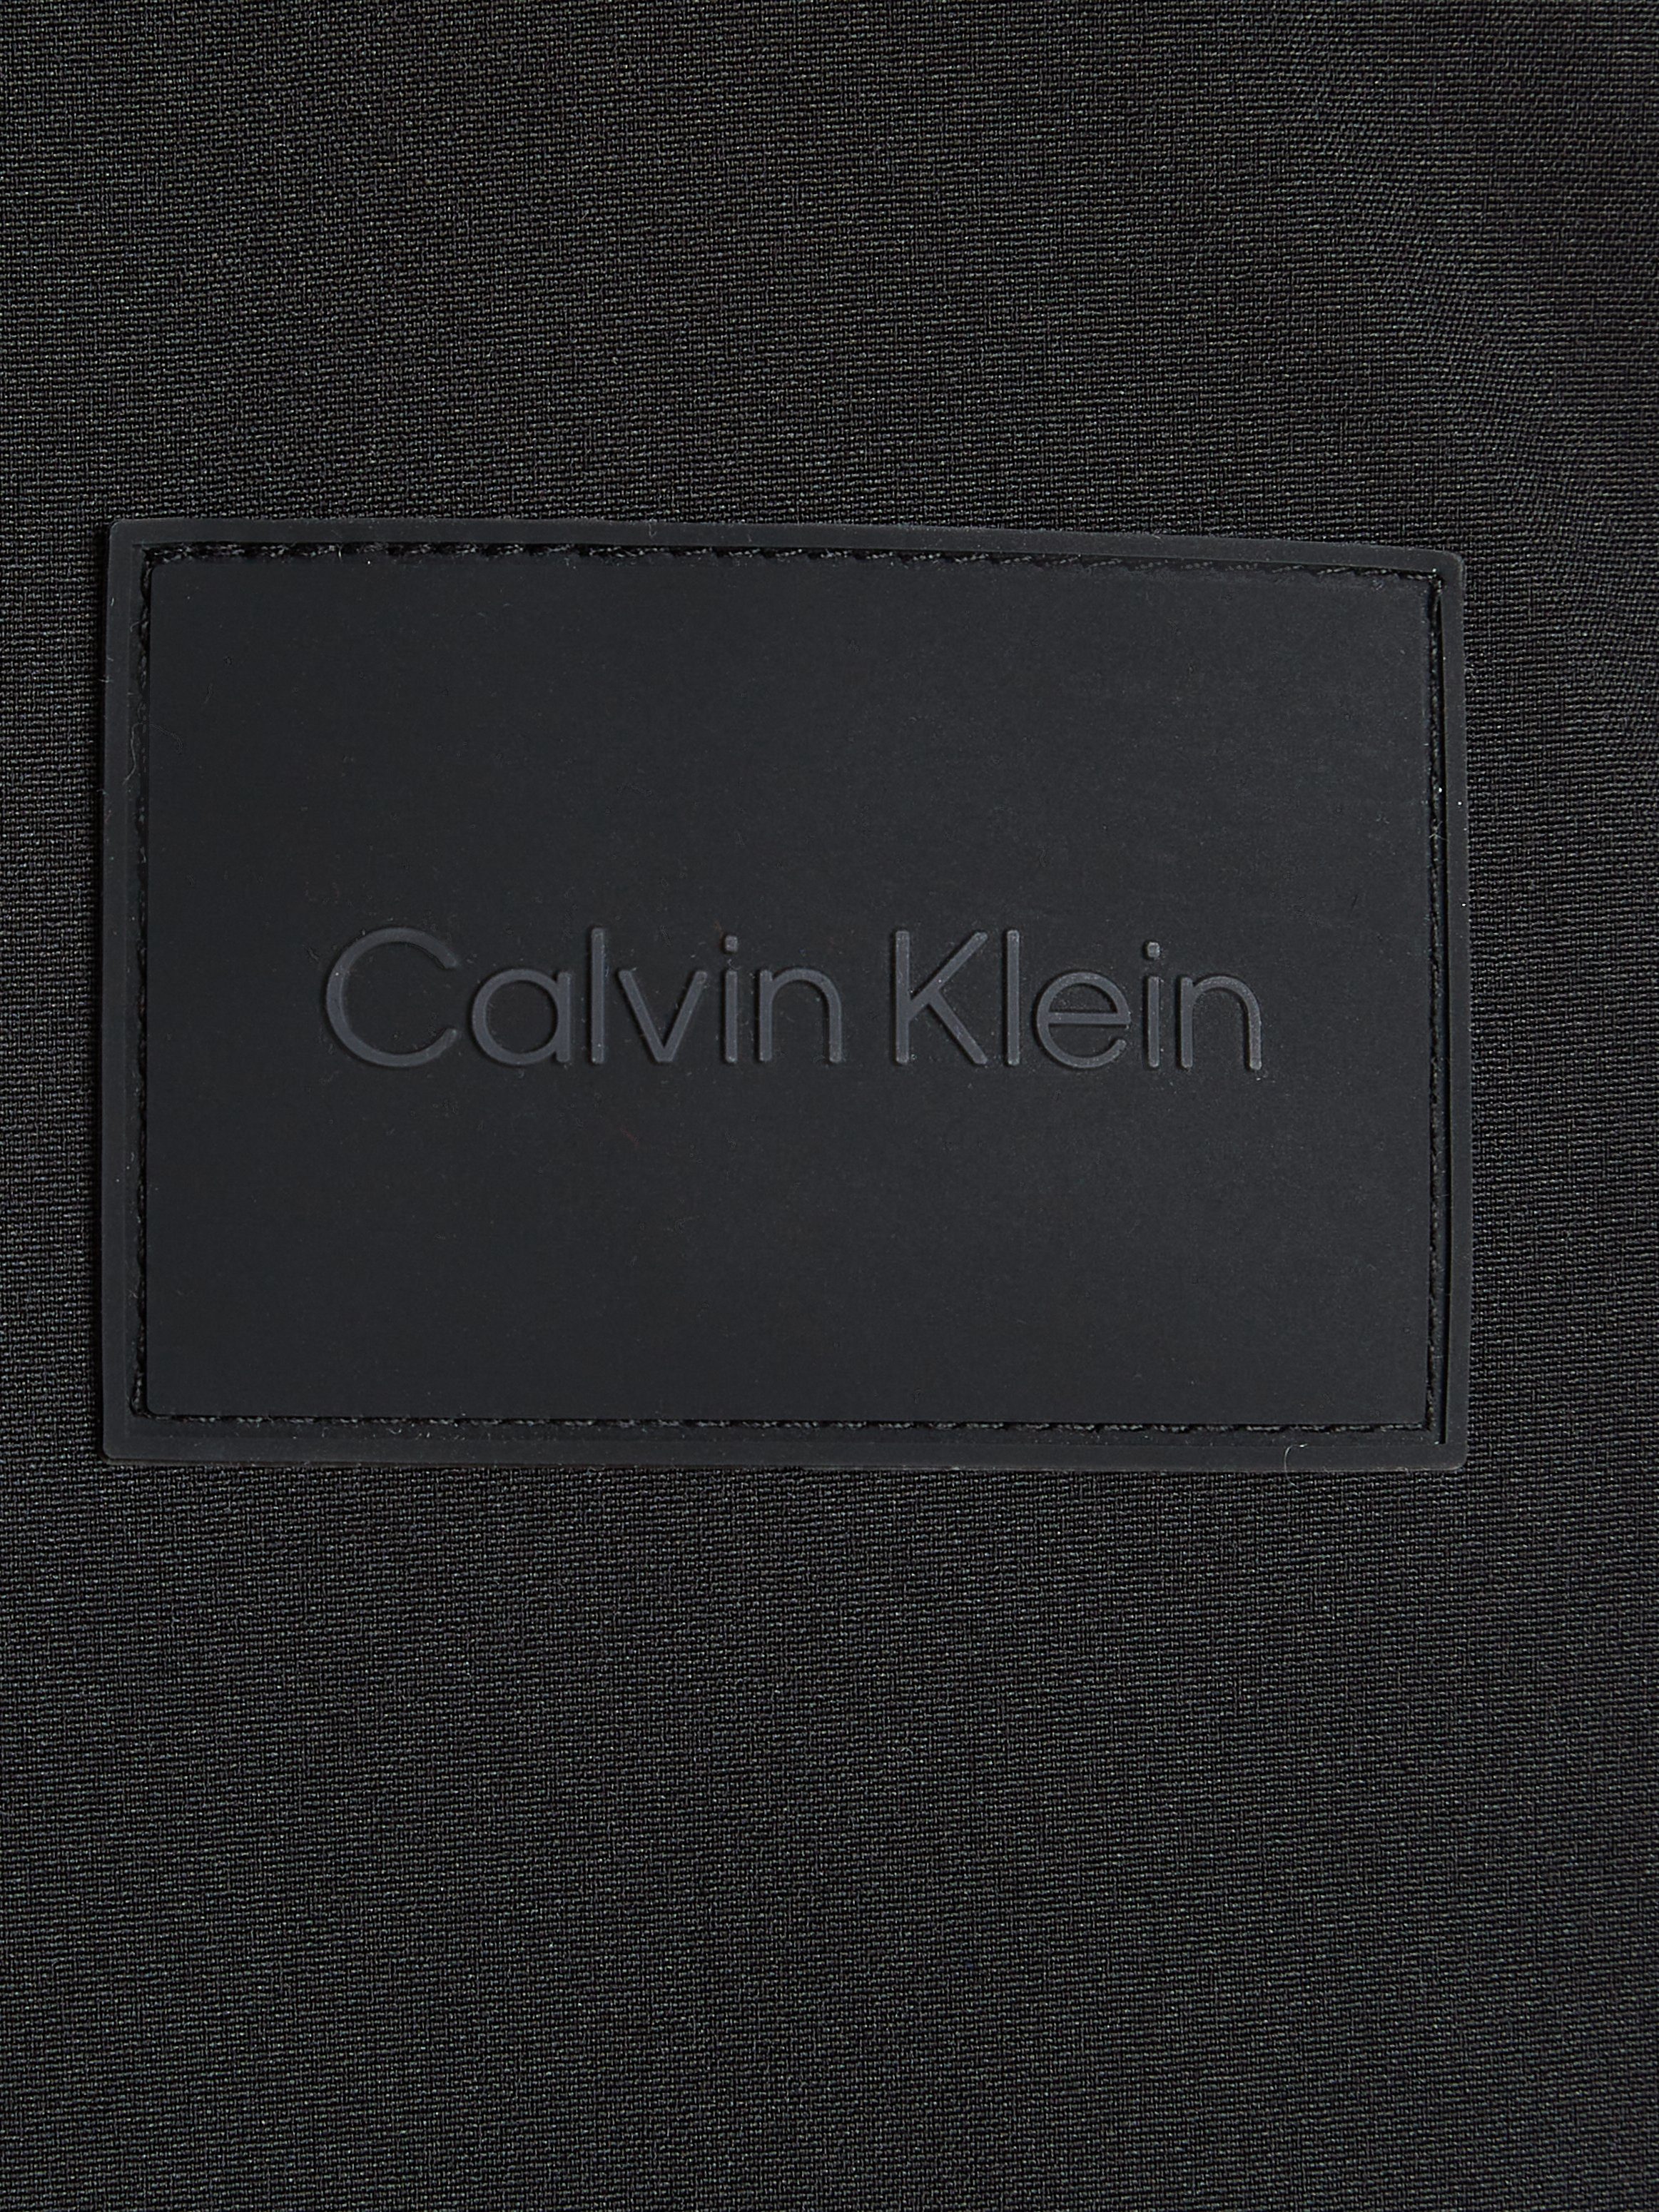 Calvin Klein Big&Tall BT_QUILTED MEDIA MIX Ck Black Outdoorjacke HOOD JACKET